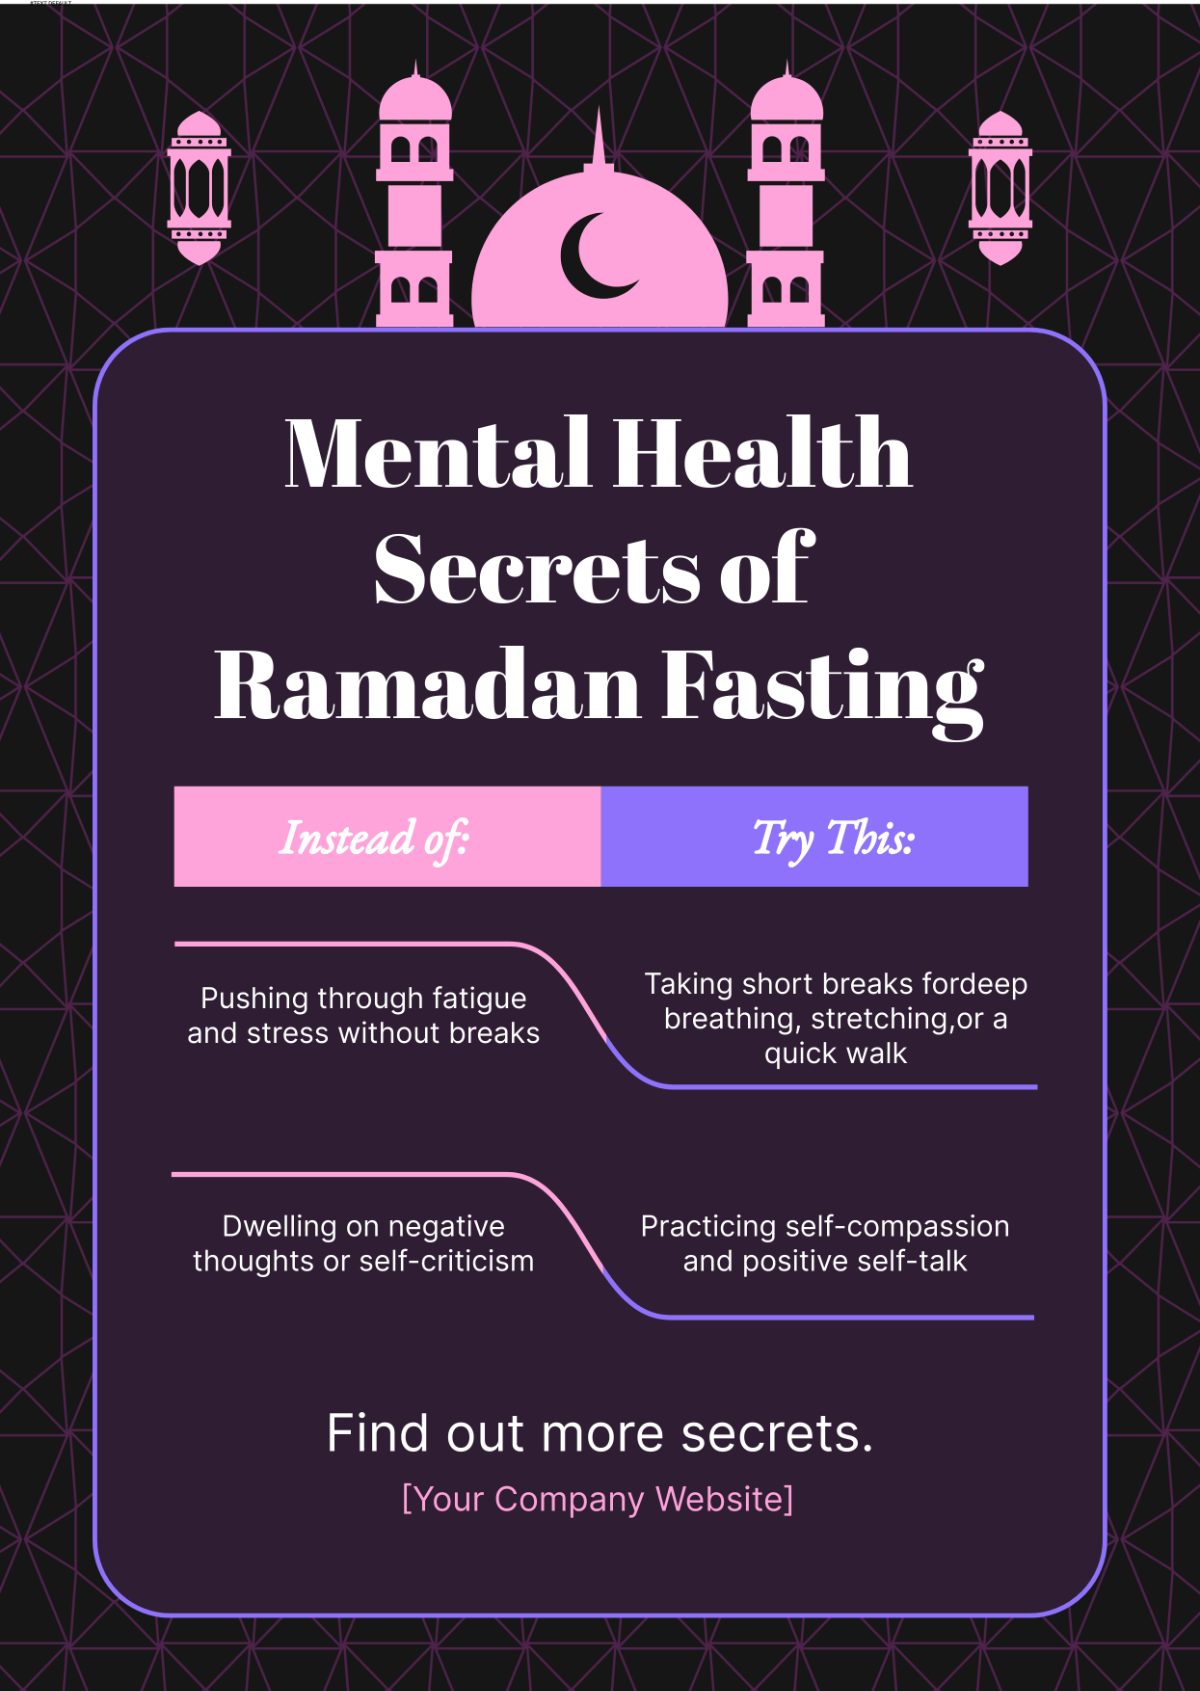 Mental Health Secrets of Ramadan Fasting Template